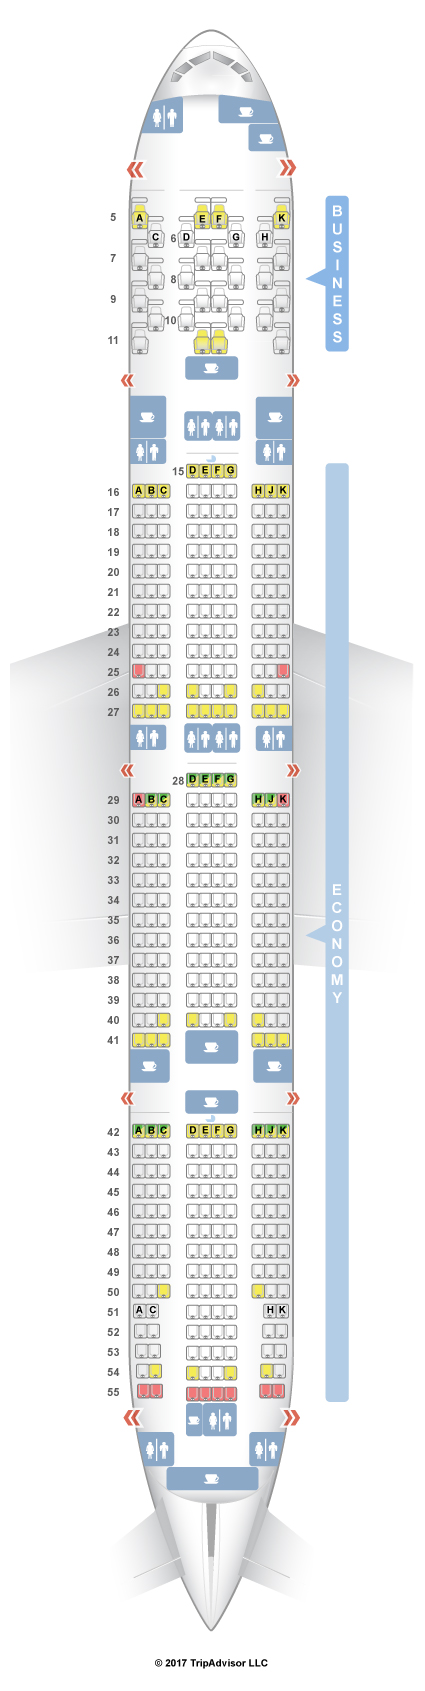 SeatGuru Seat Map Etihad Boeing 777-300ER (77W) Two Class V1